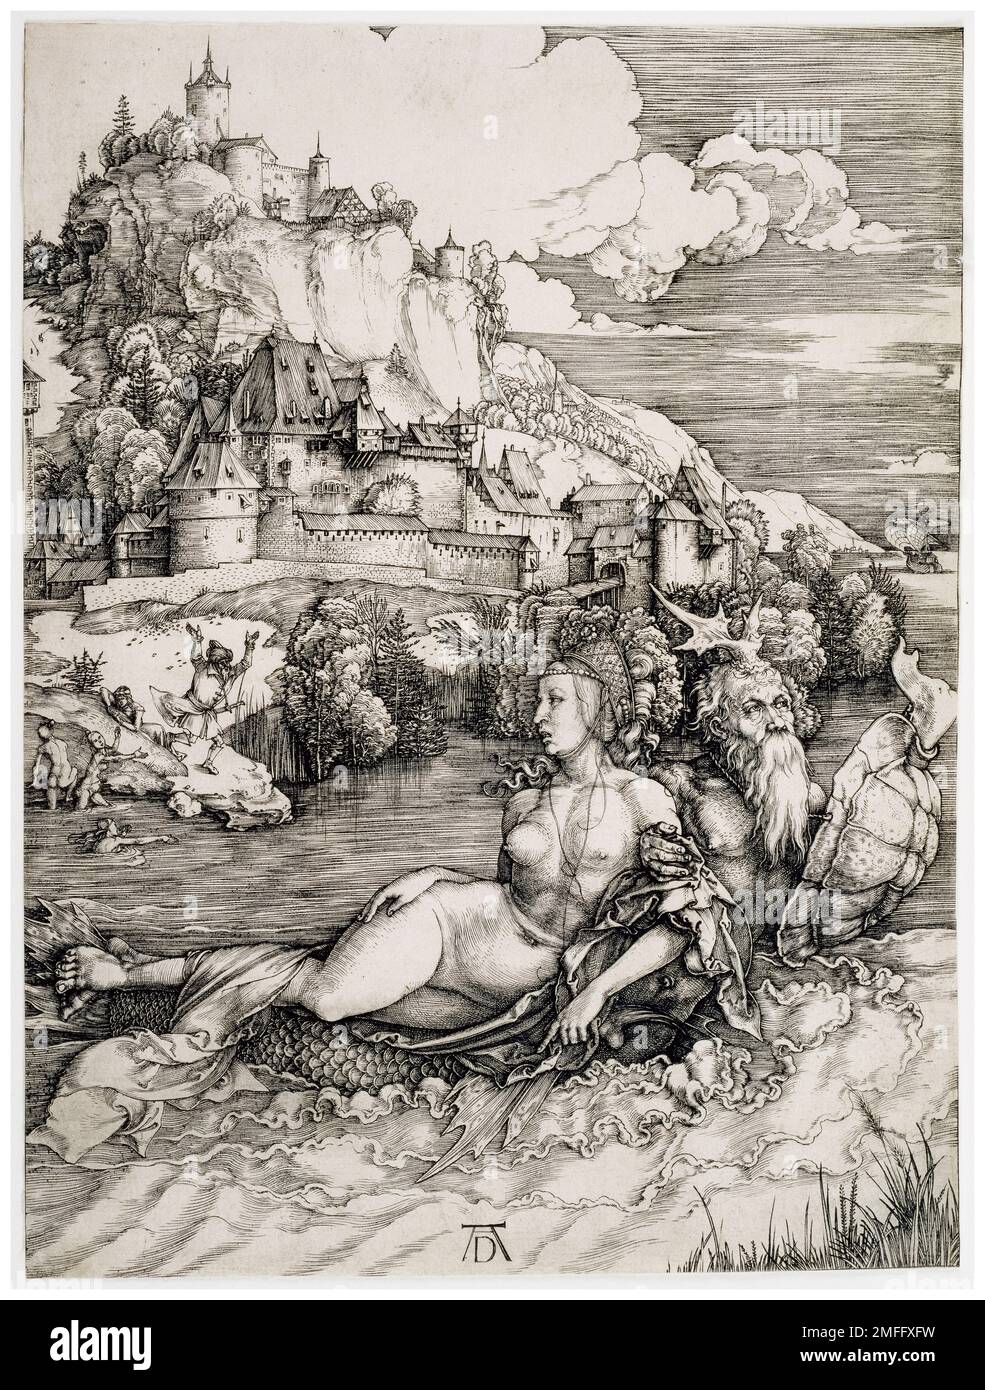 Albrecht Durer, The Sea Monster, gravure de plaques de copperplate, vers 1498 Banque D'Images